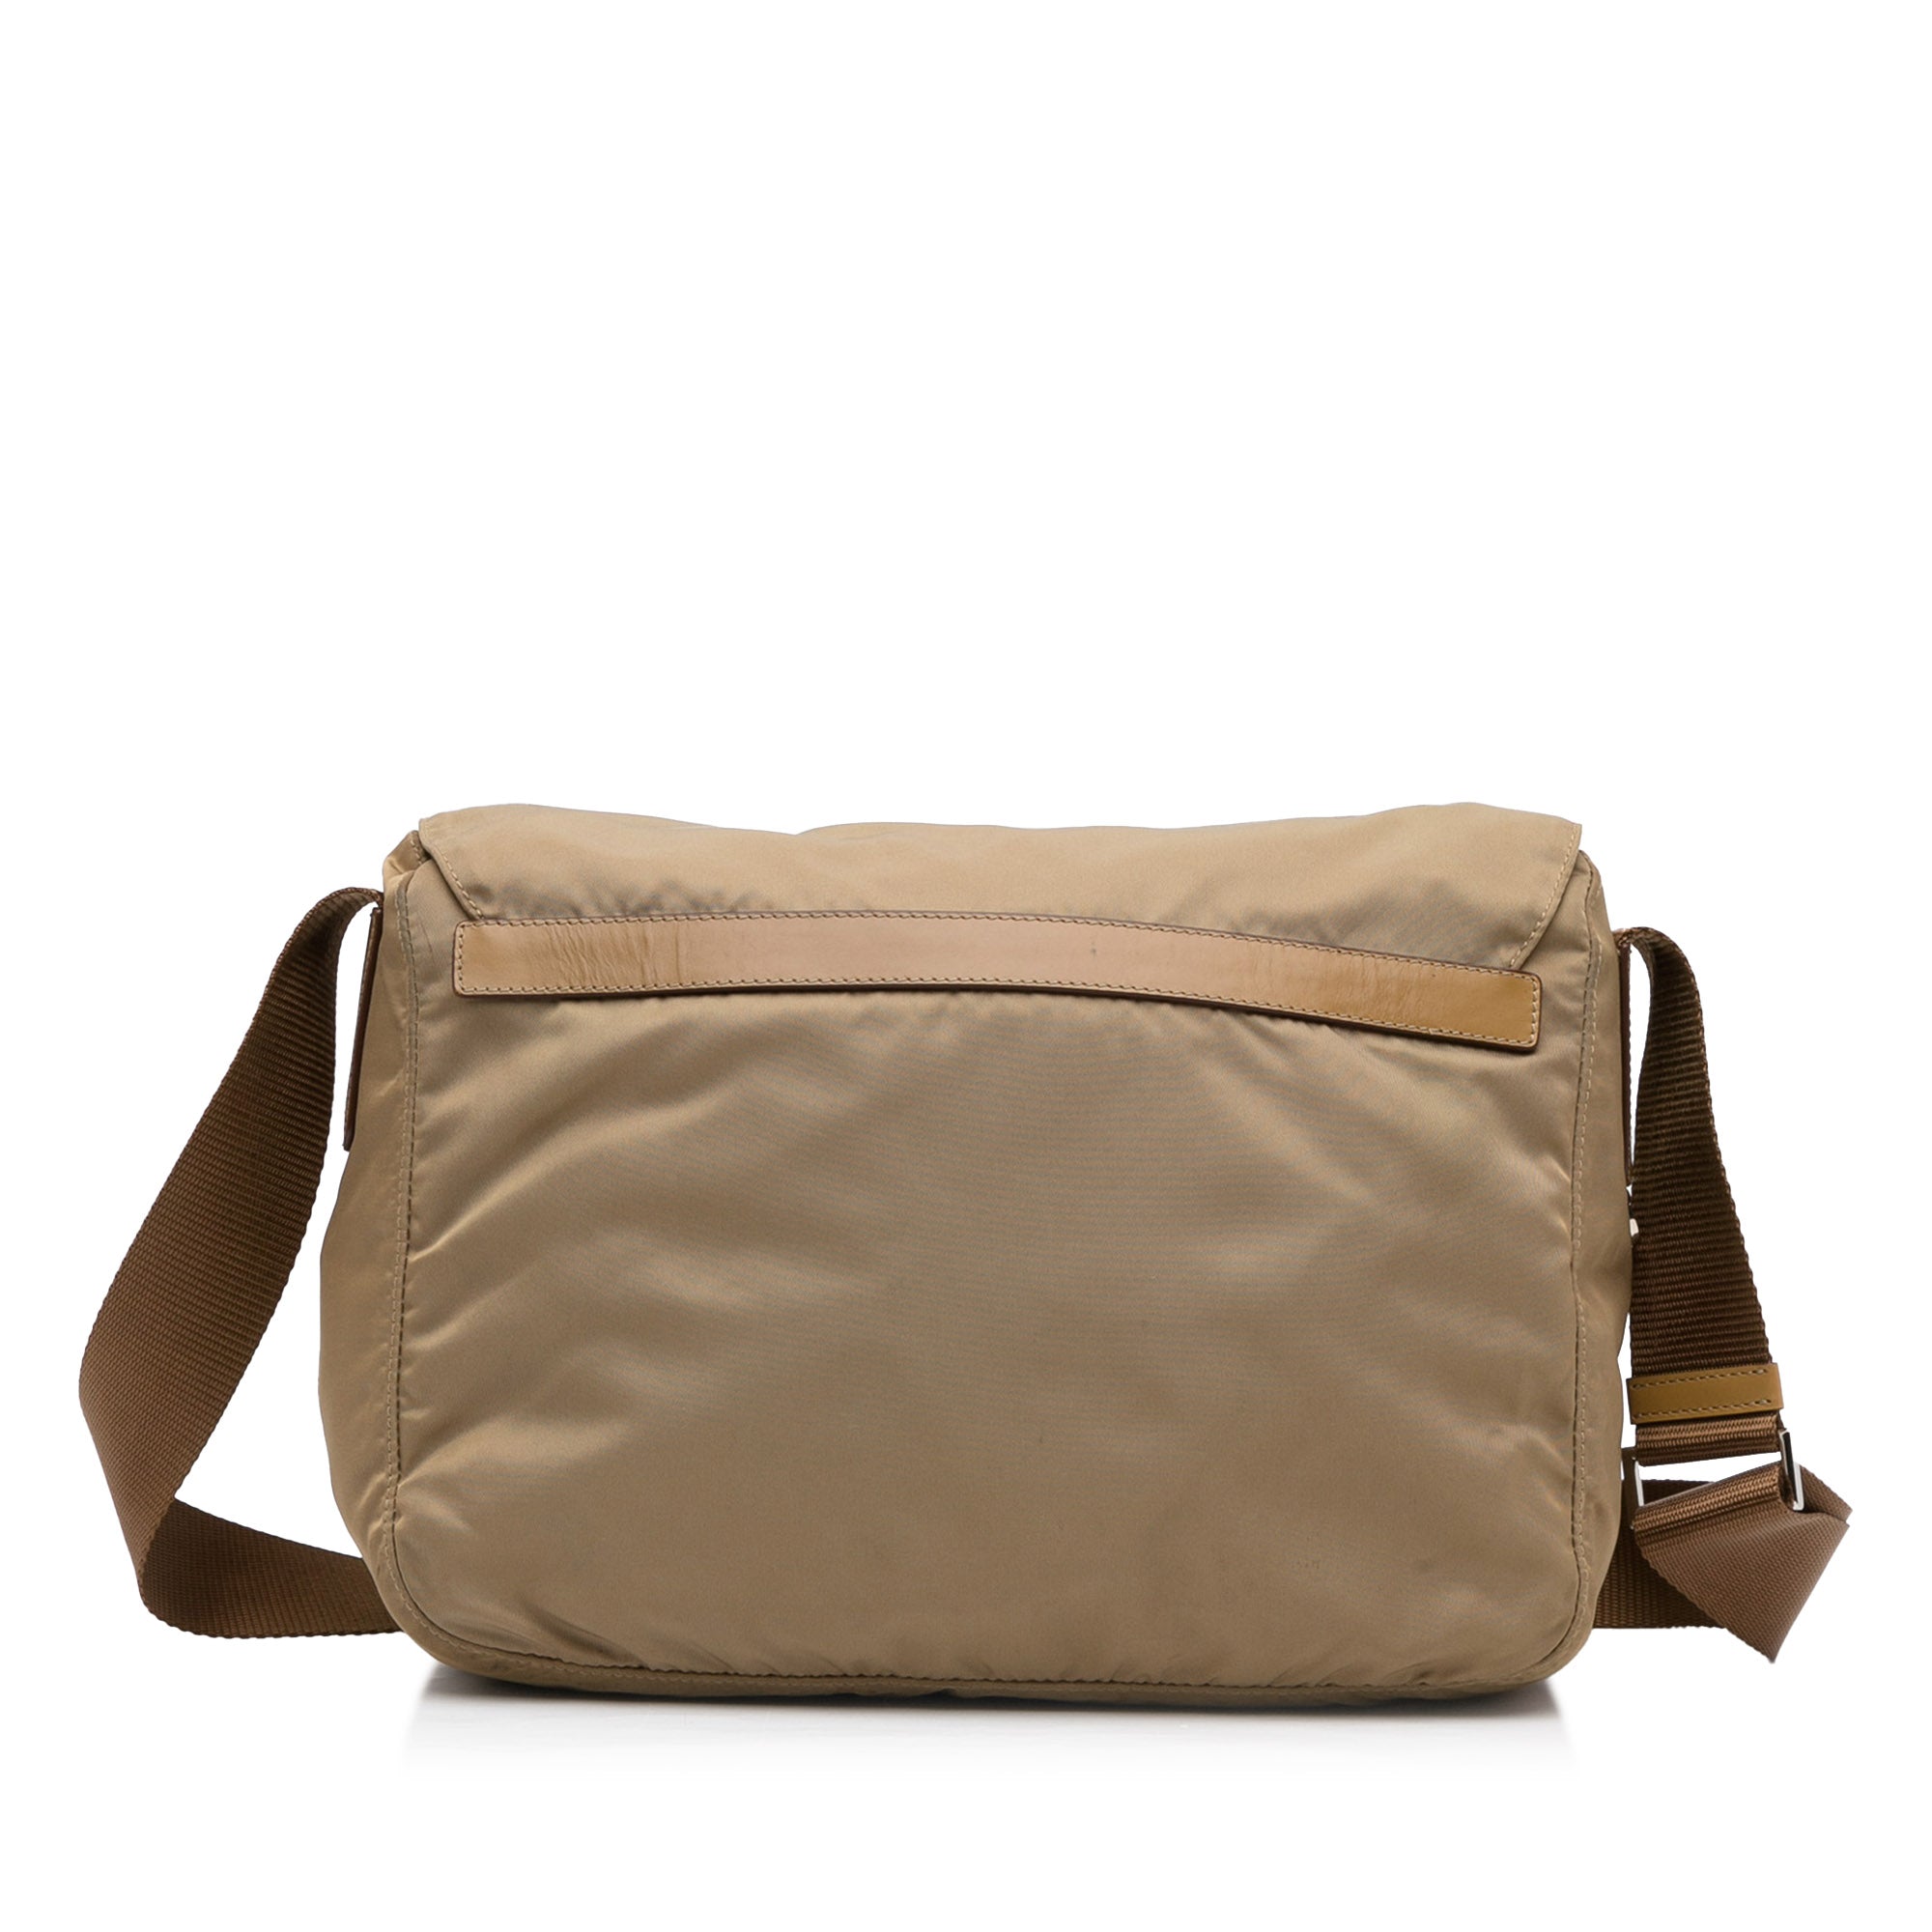 PRADA Messenger Bags & Handbags for Women, Authenticity Guaranteed